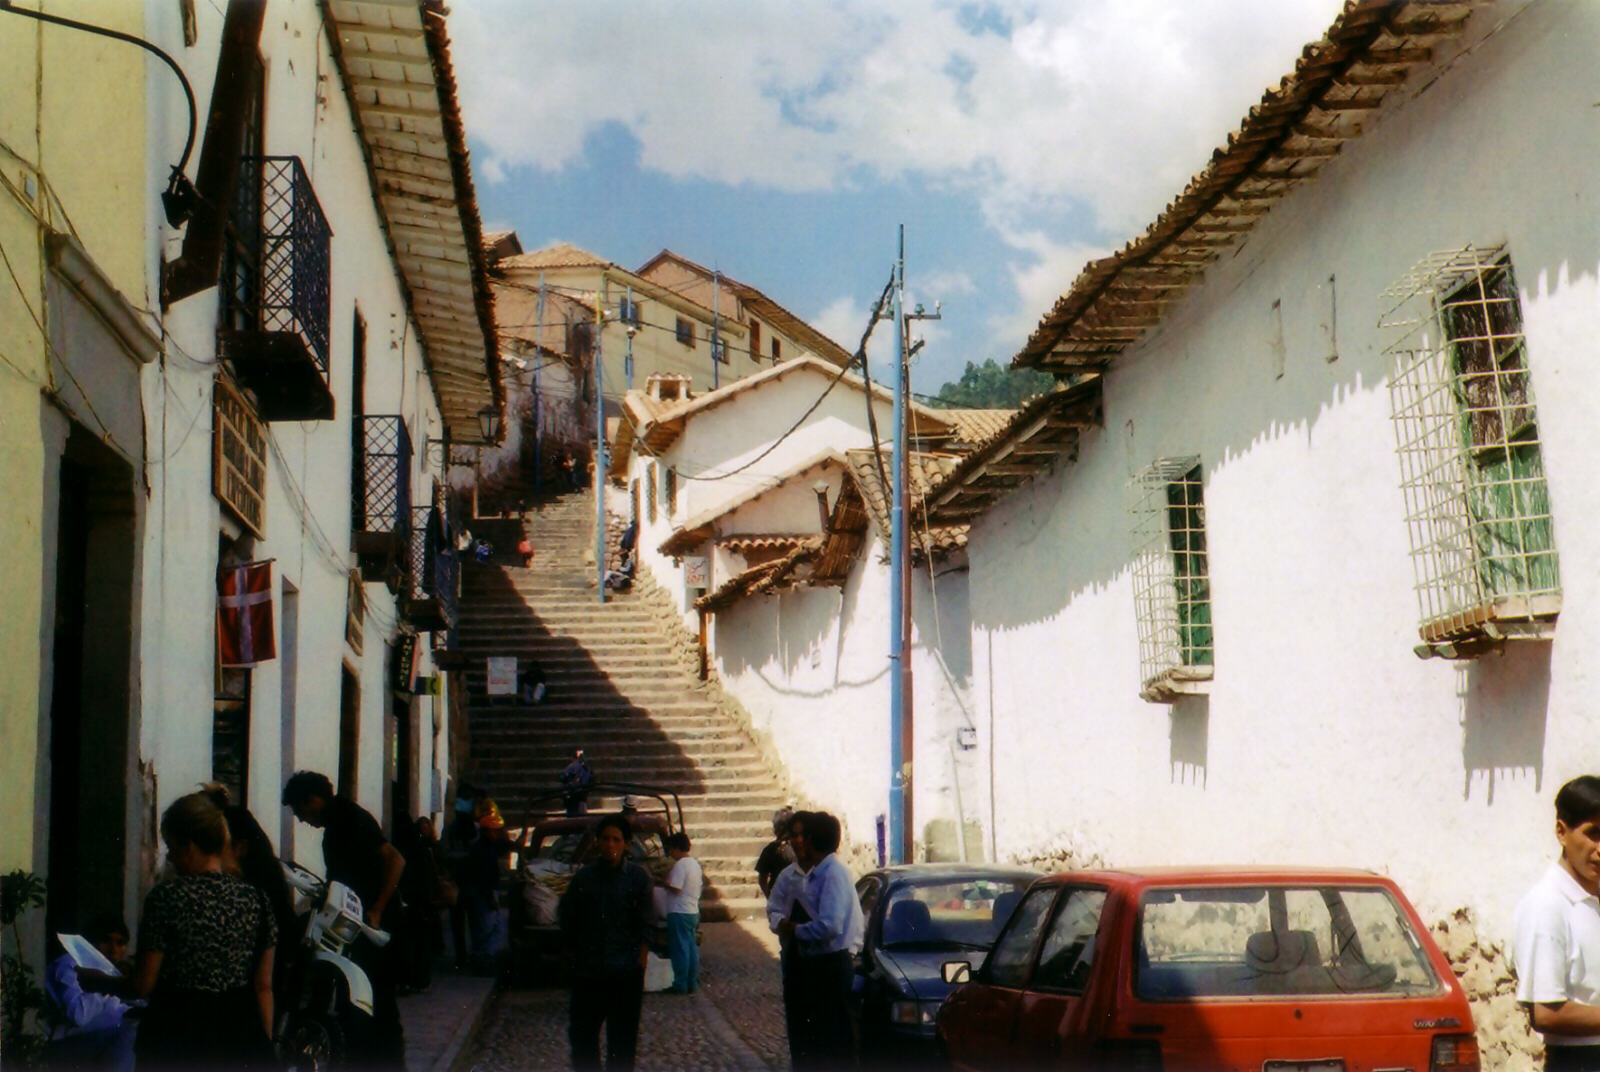 Tecsecocha Street (and stairway) in Cusco, Peru